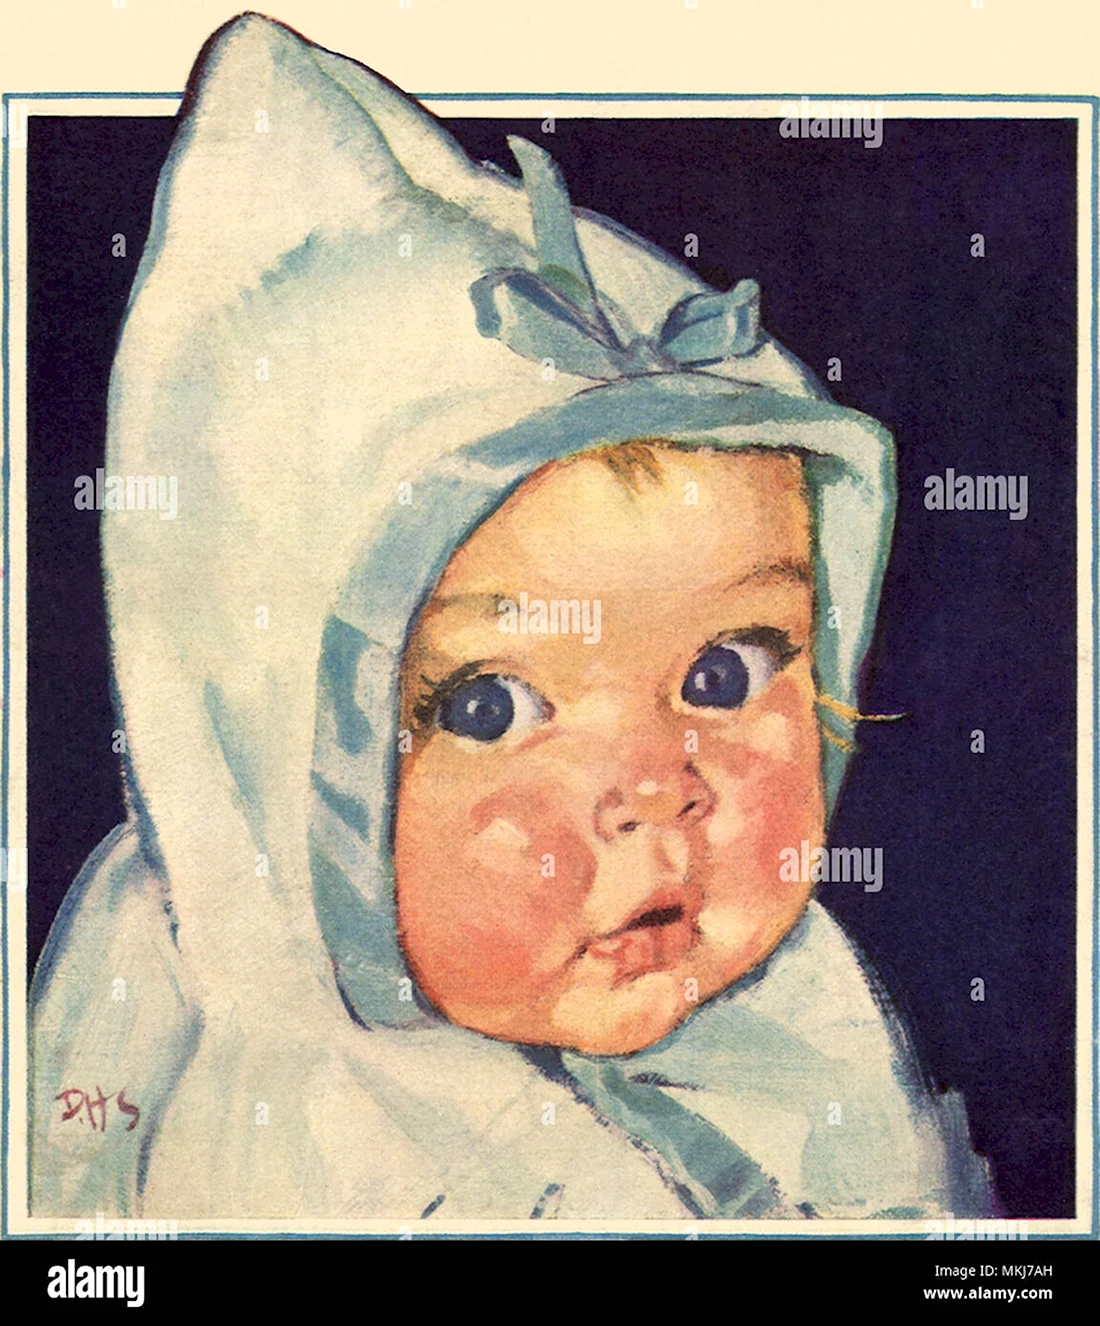 Советские открытки с младенцами